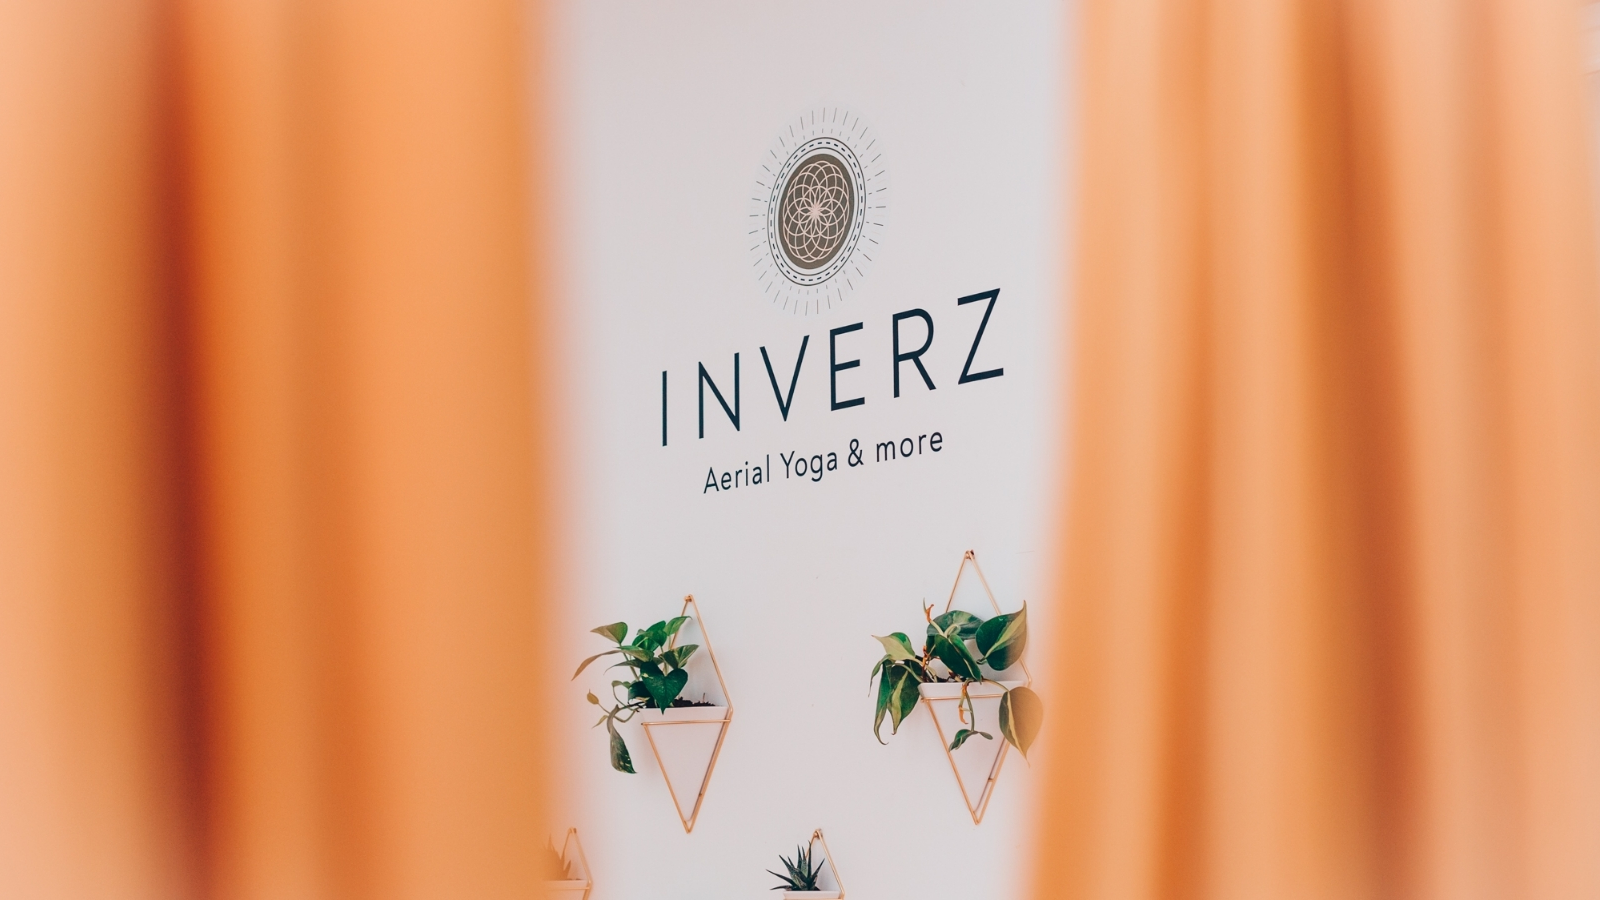 INVERZ - Aerial Yoga & more